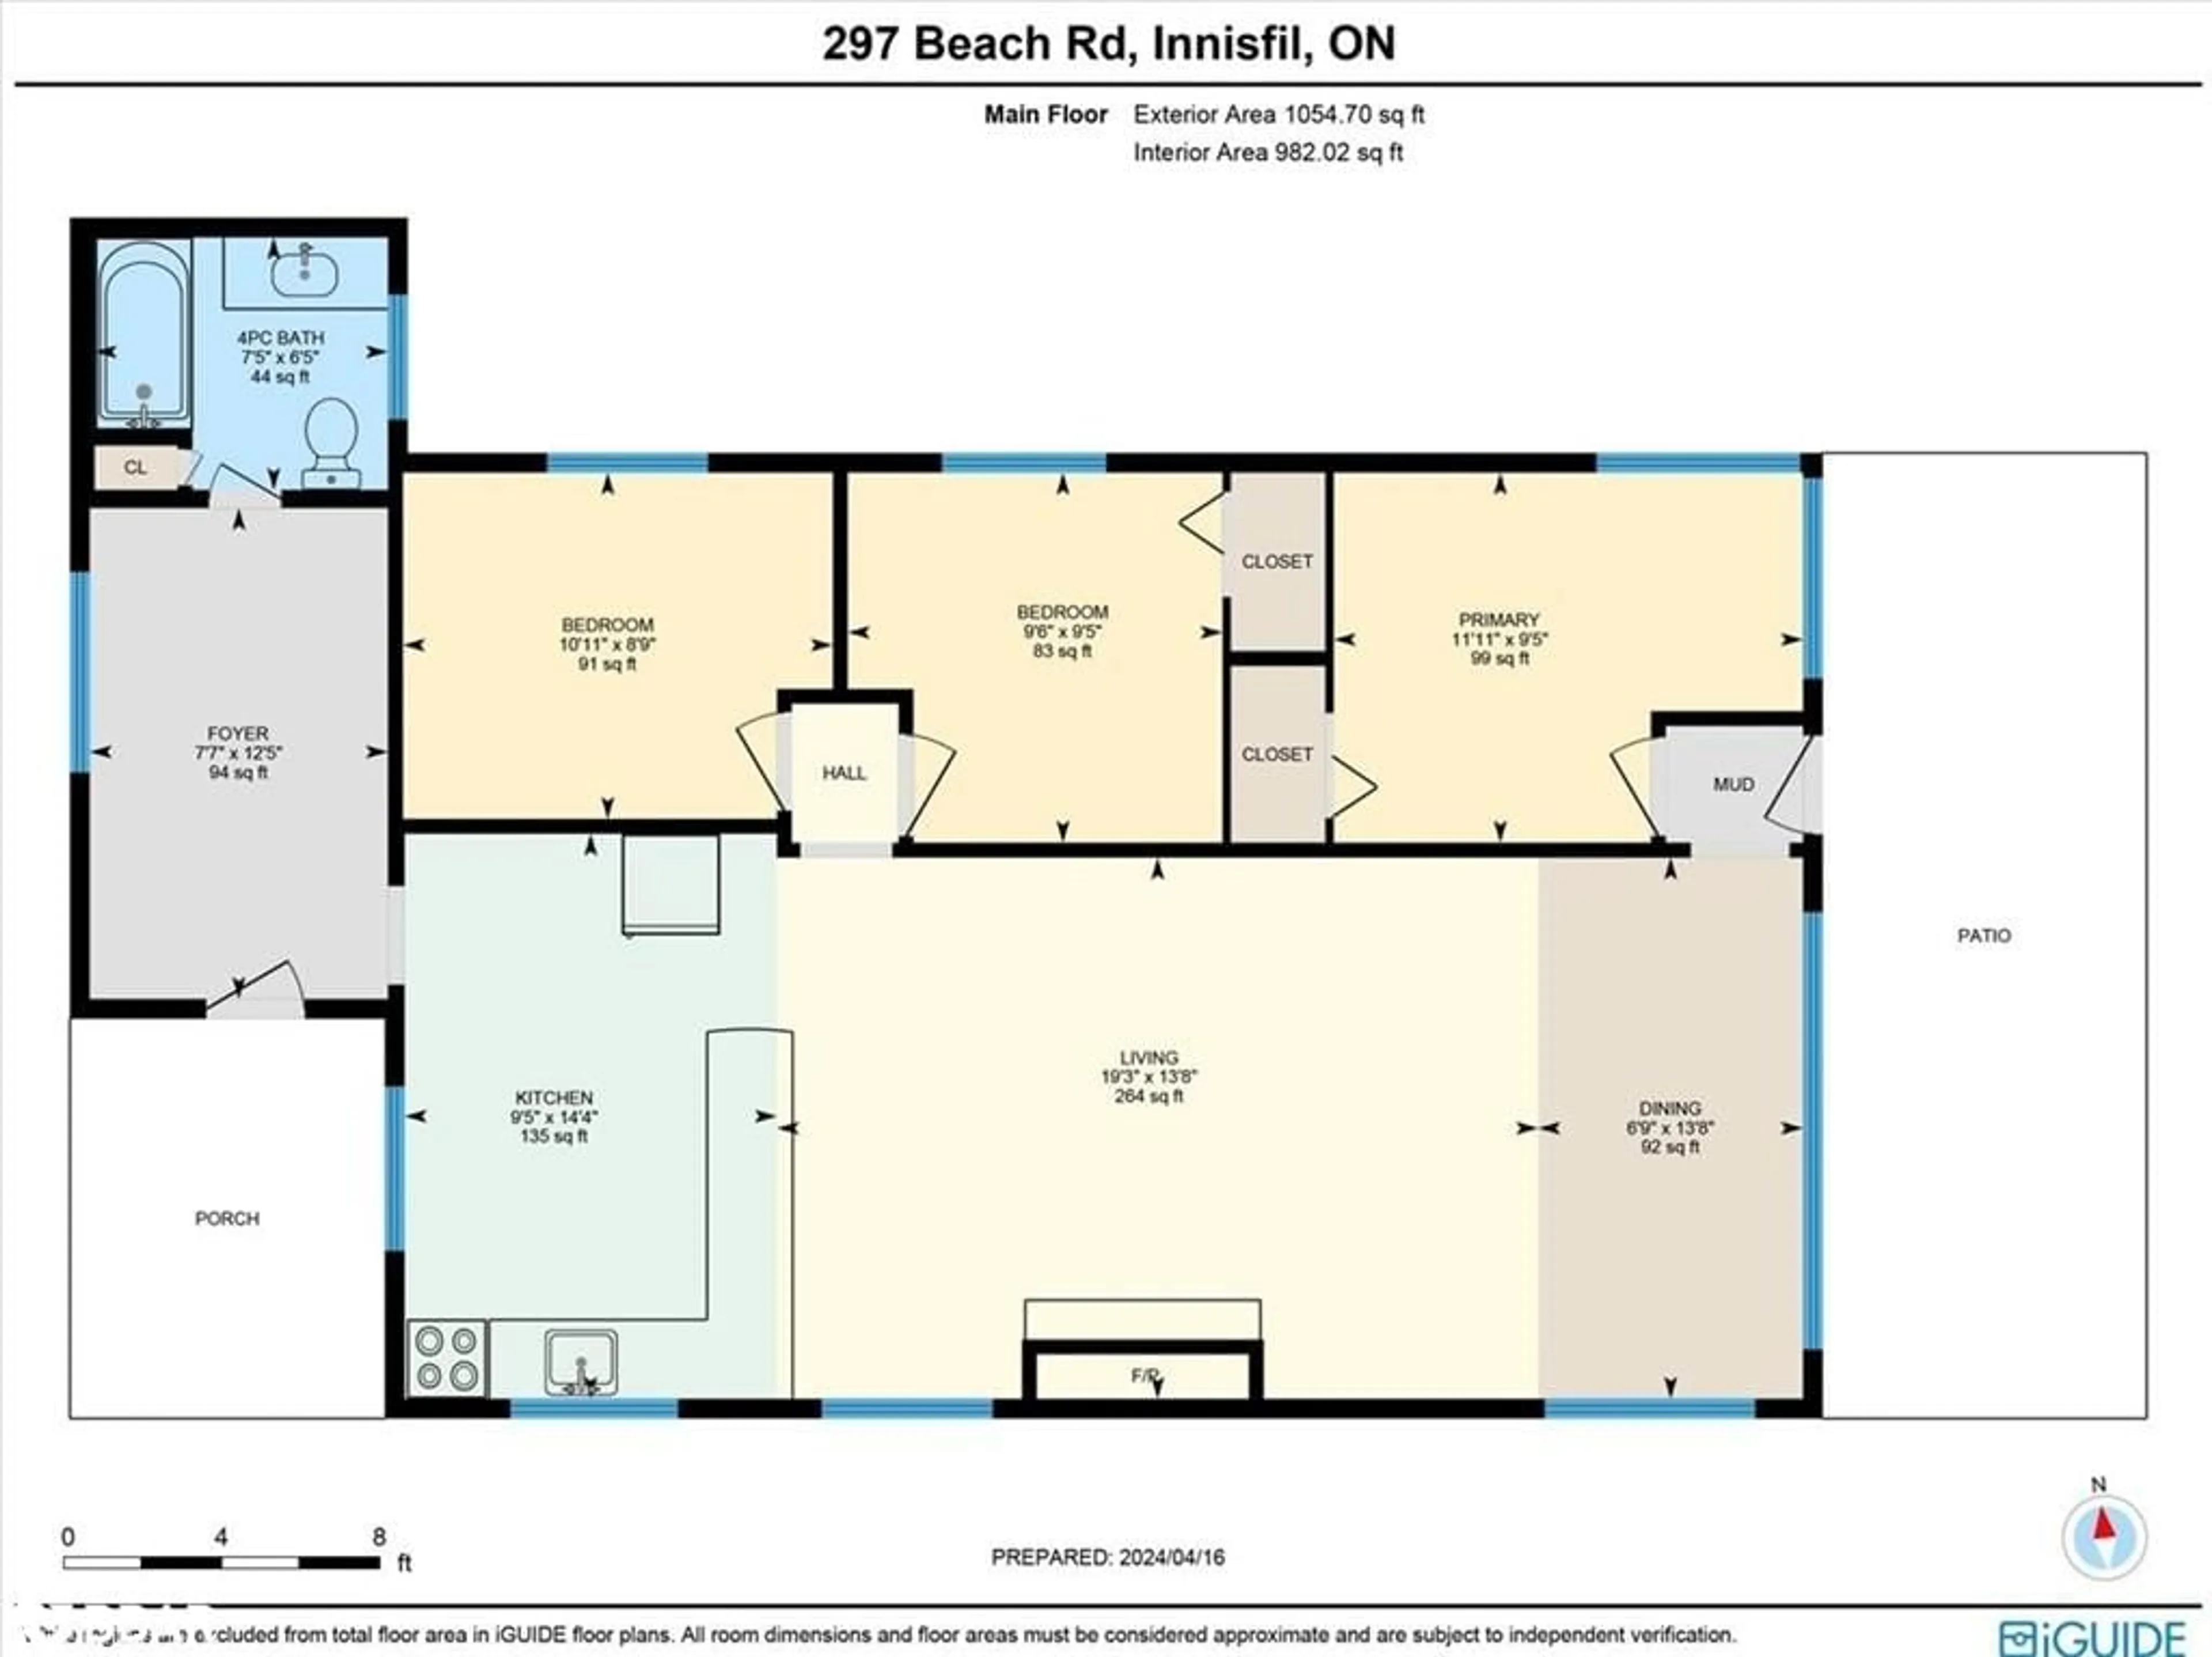 Floor plan for 297 Beach Rd, Innisfil Ontario L0L 1R0